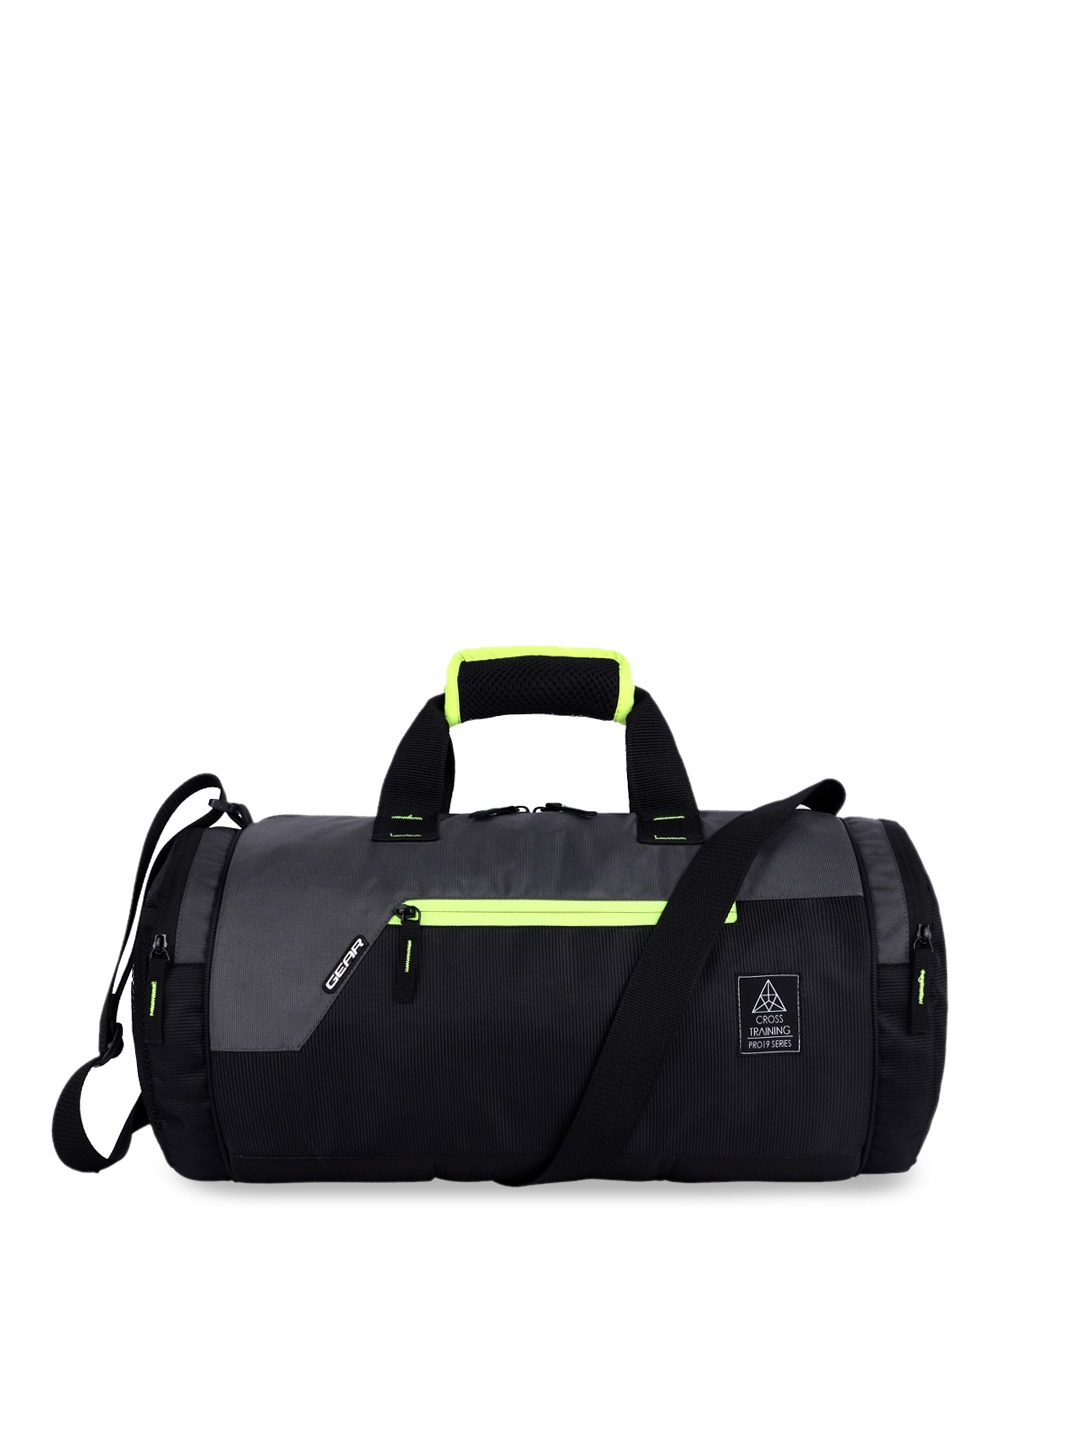 Accessories Duffel Bag | Gear Unisex Black & Grey Colourblocked Cross-Training Duffel Bag - OB92355